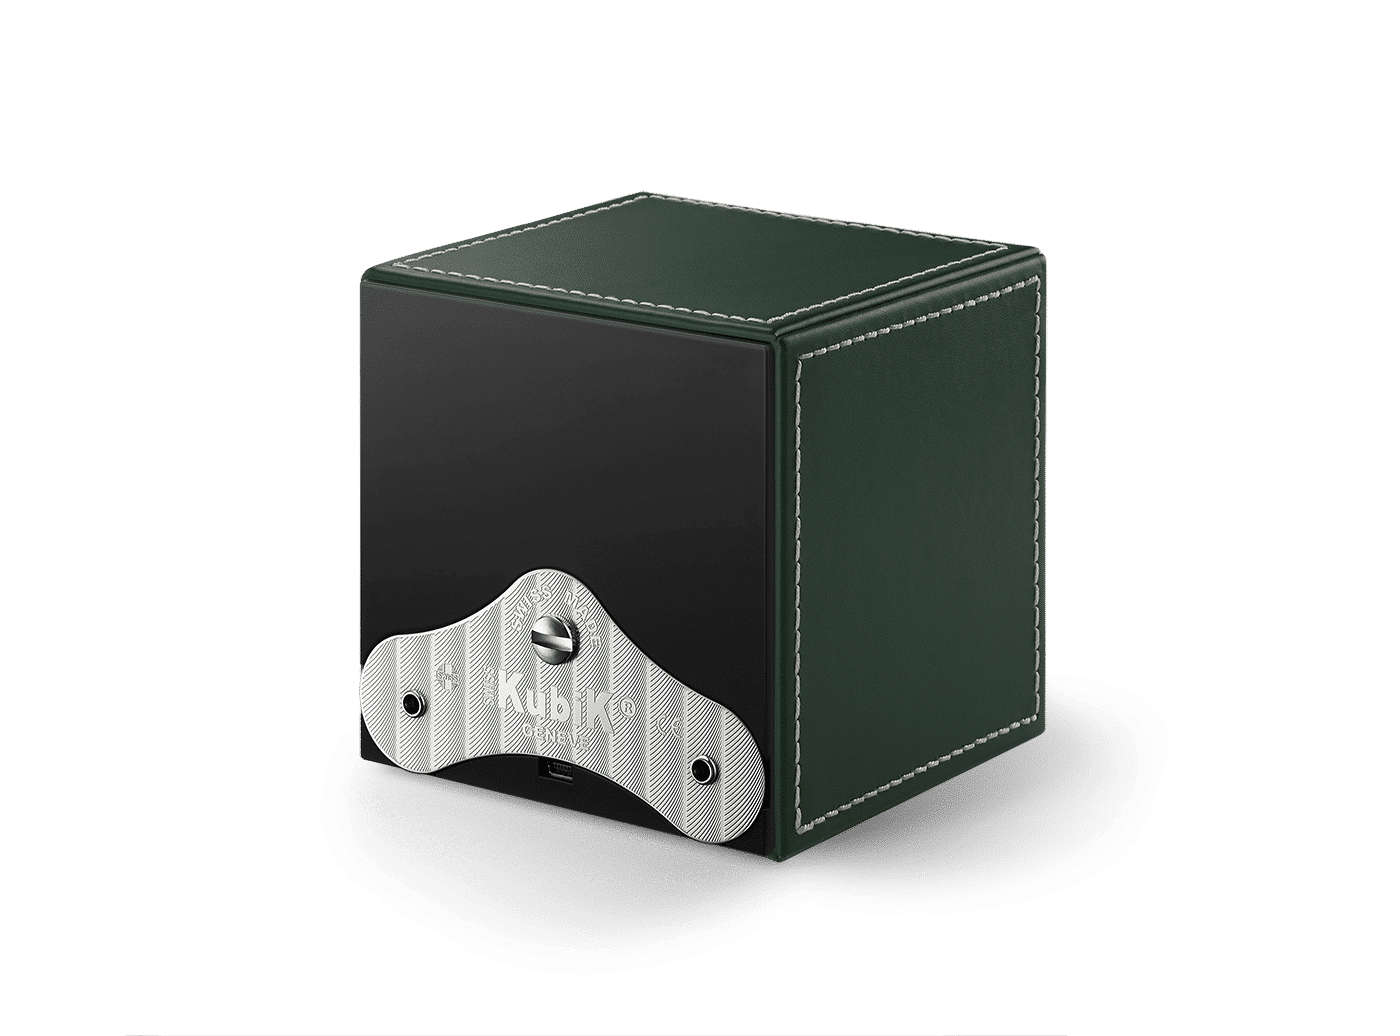 Masterbox Cuir Duo Vert Surpiqures Blanches Multiple Référence :  SK02.CV005 -3